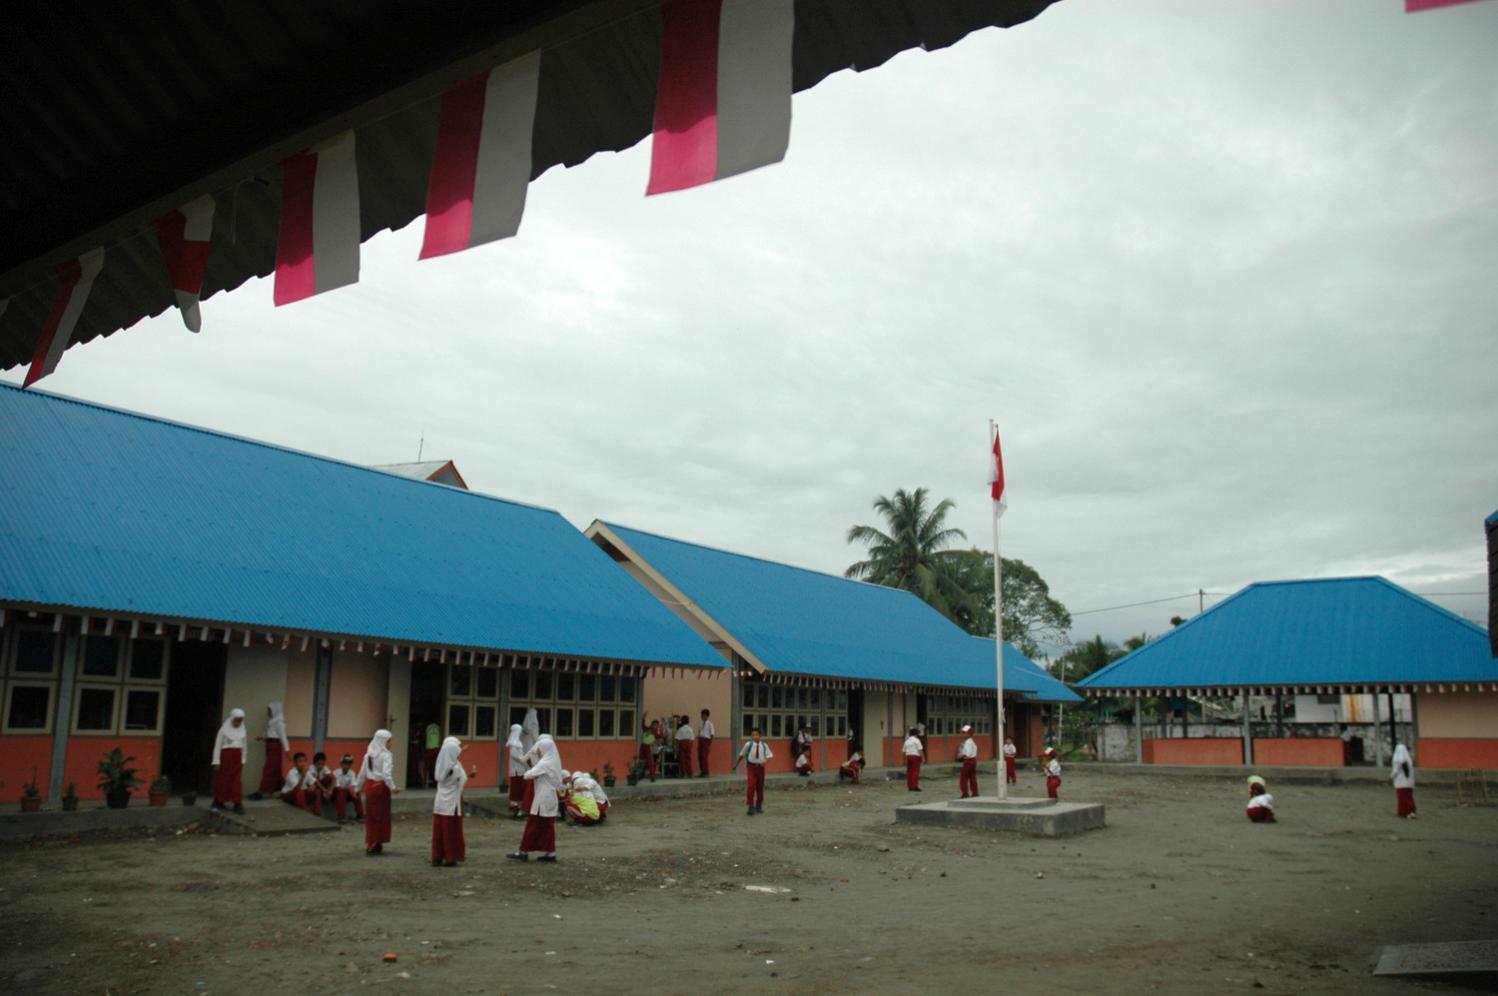 Overview of primary school